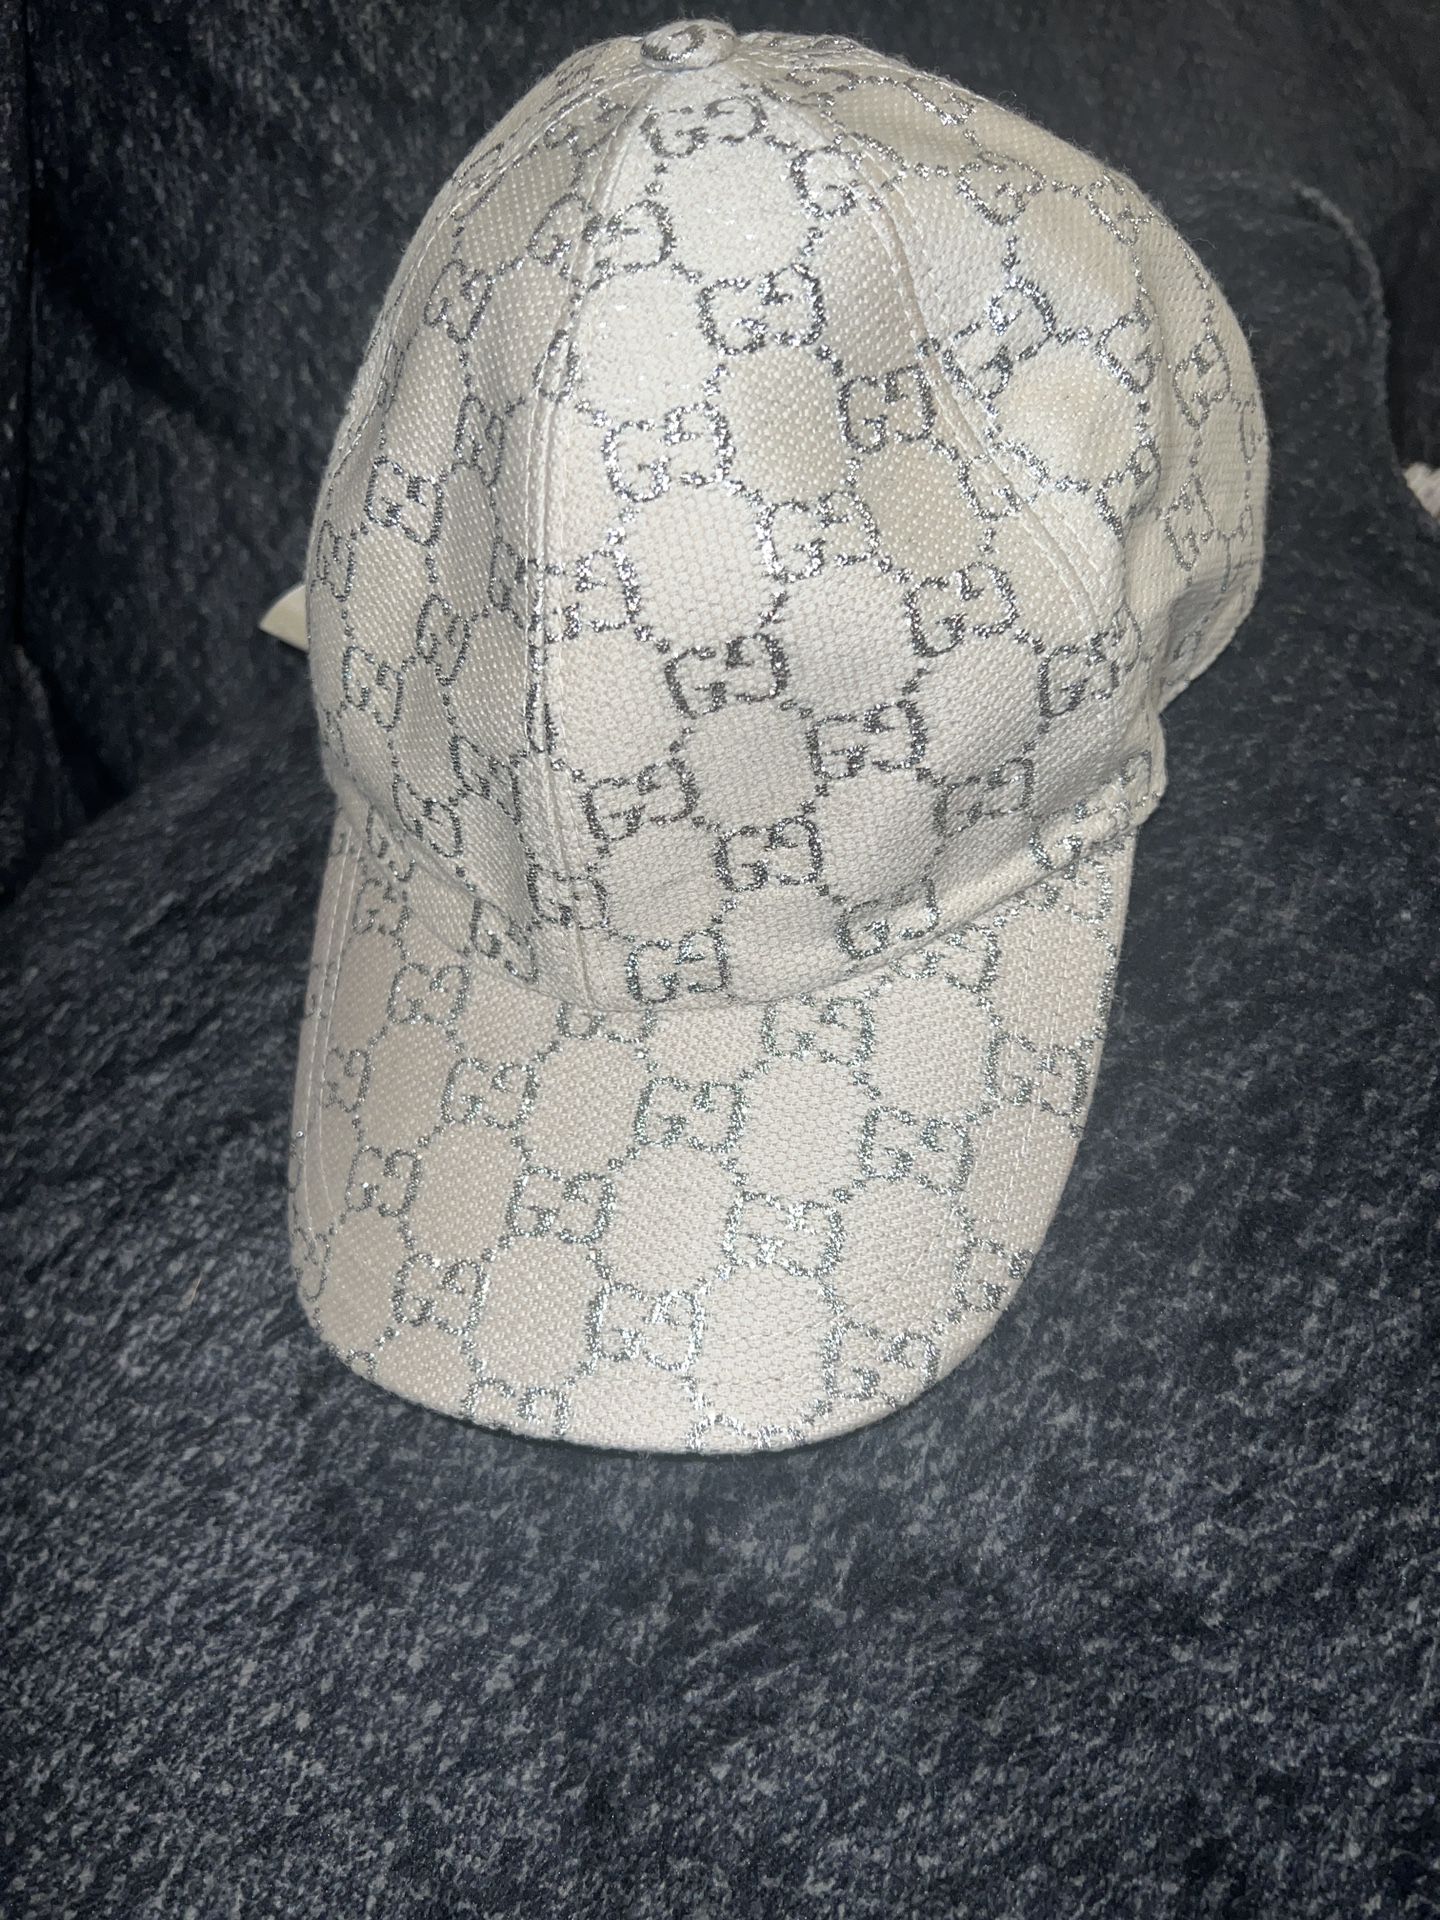 Hat for Sale in Deer, OfferUp